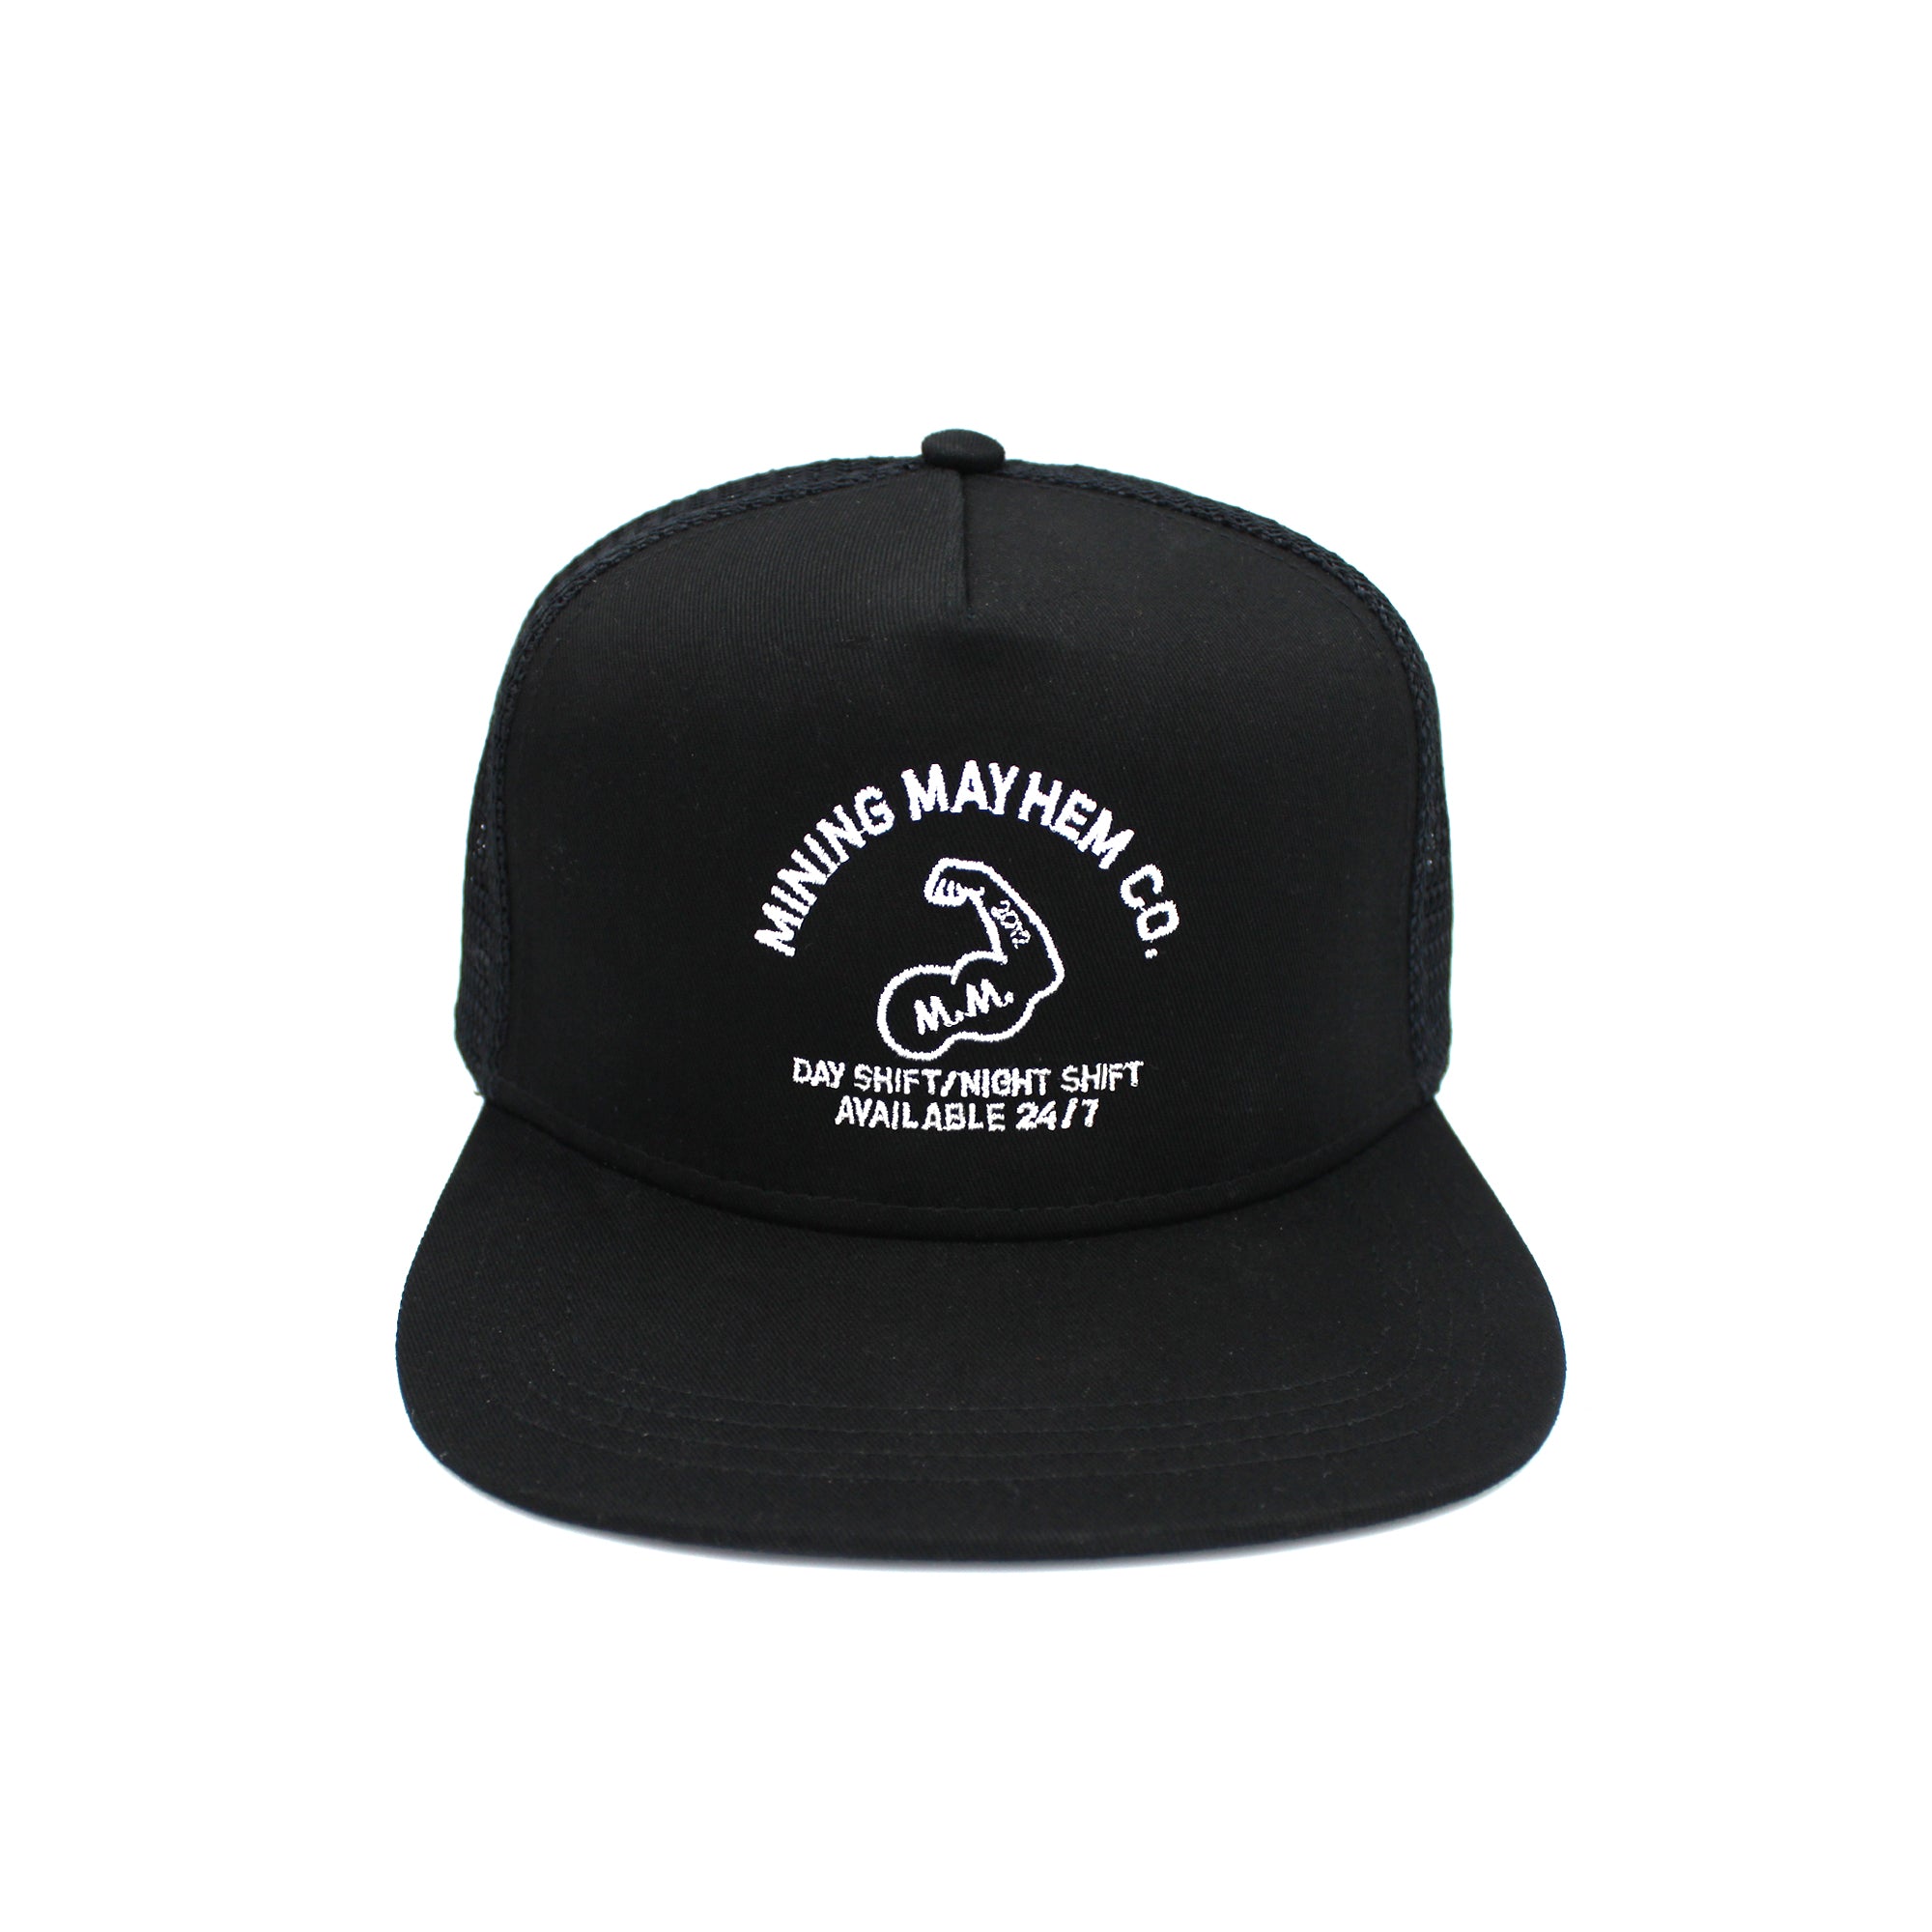 Mining Mayhem Co - Trucker Caps (Black)